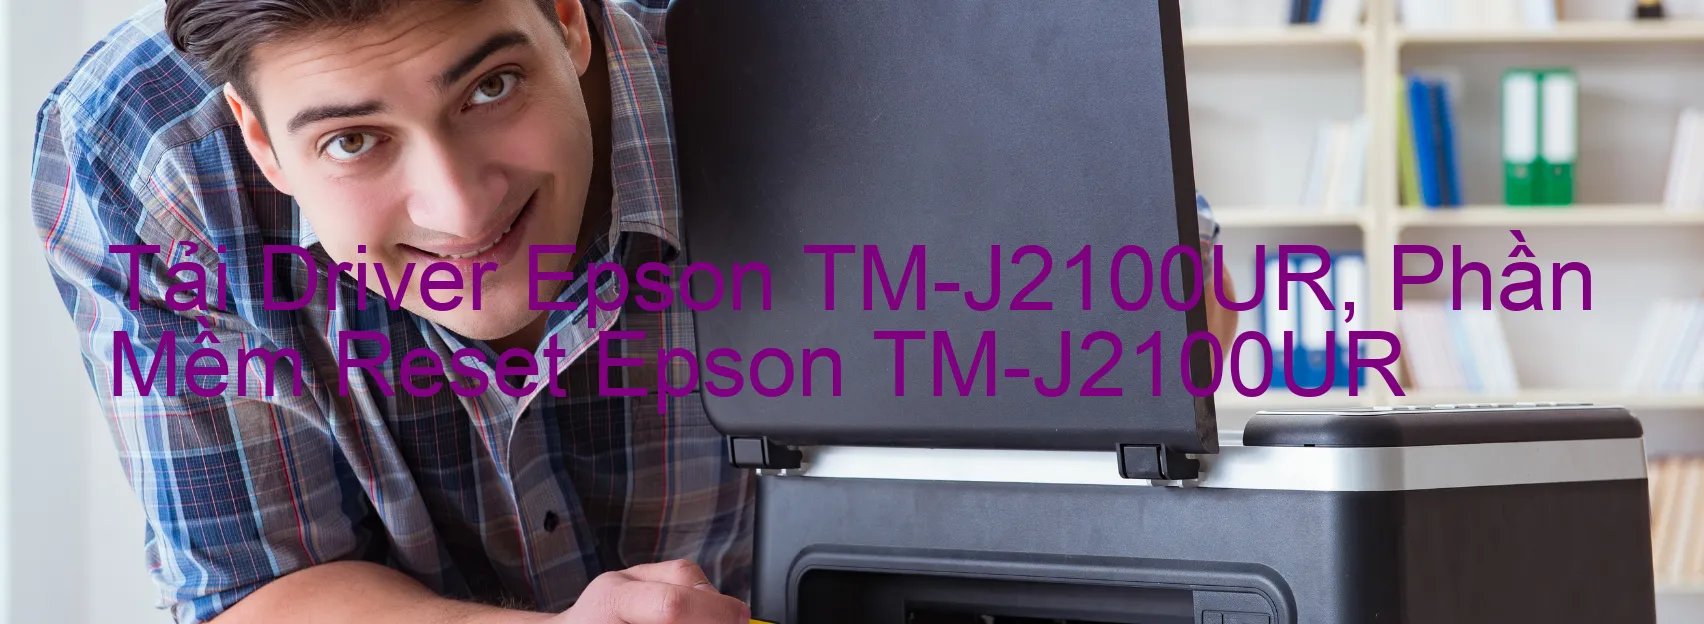 Driver Epson TM-J2100UR, Phần Mềm Reset Epson TM-J2100UR